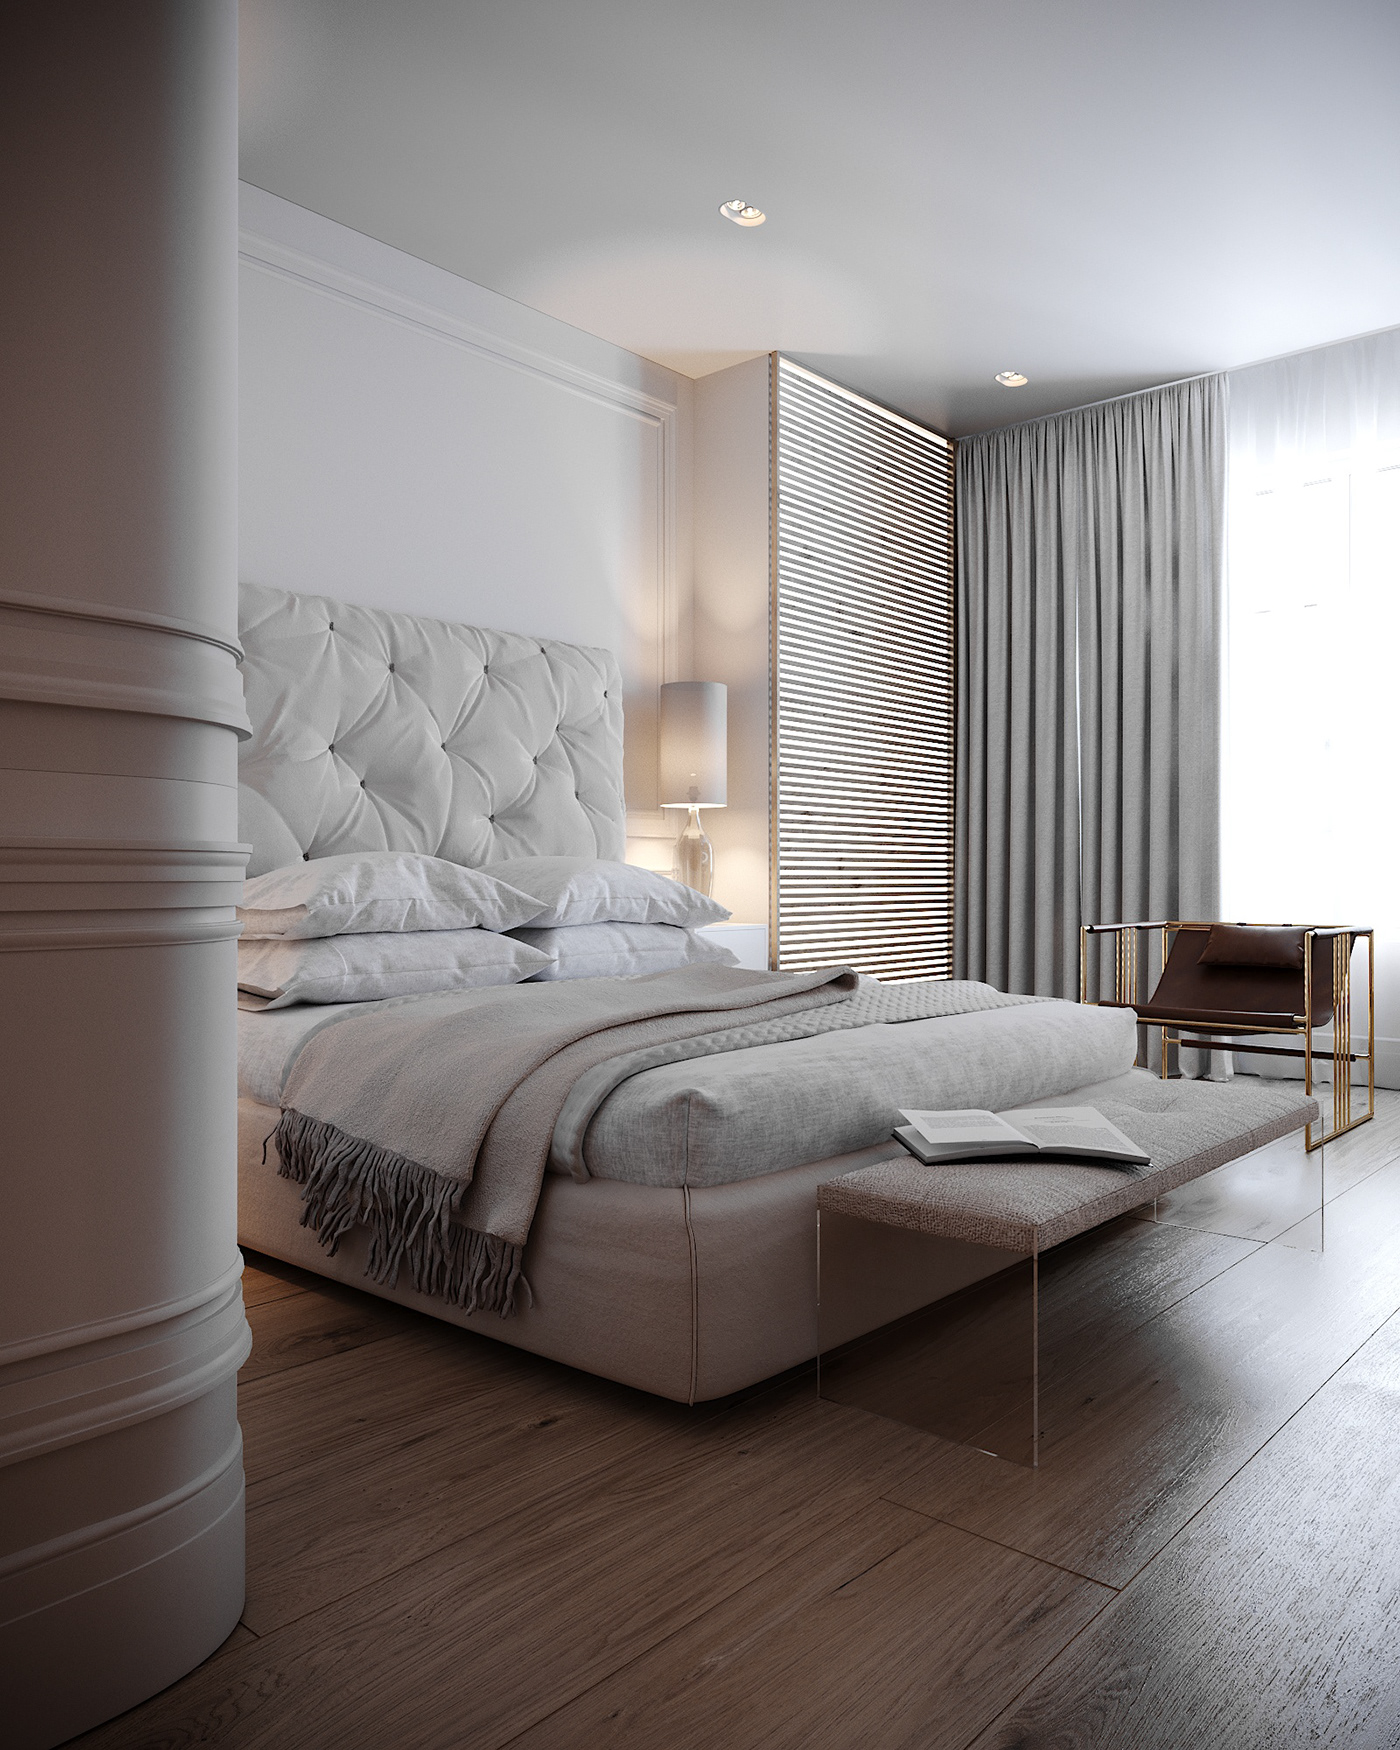 design designinterior interiordesign homedesign Interior HDm2 homedesignkiev livingroomdesign bedroomdesign bathroomdesign